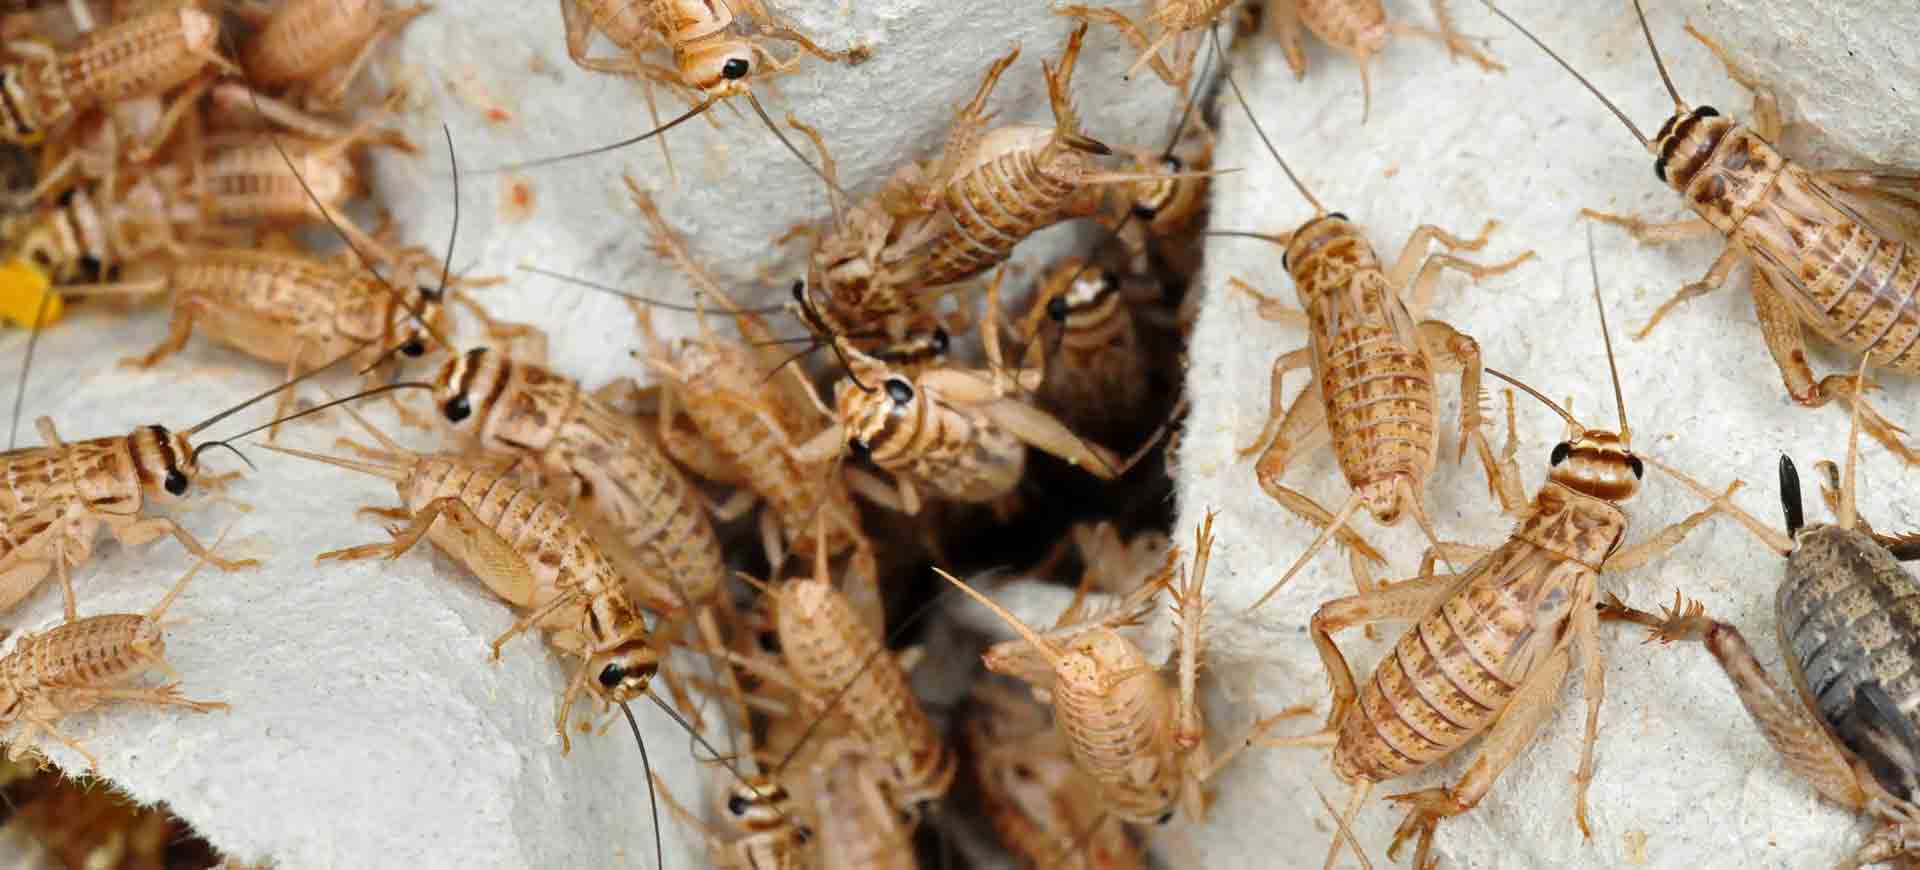 cricket pest control lakeside